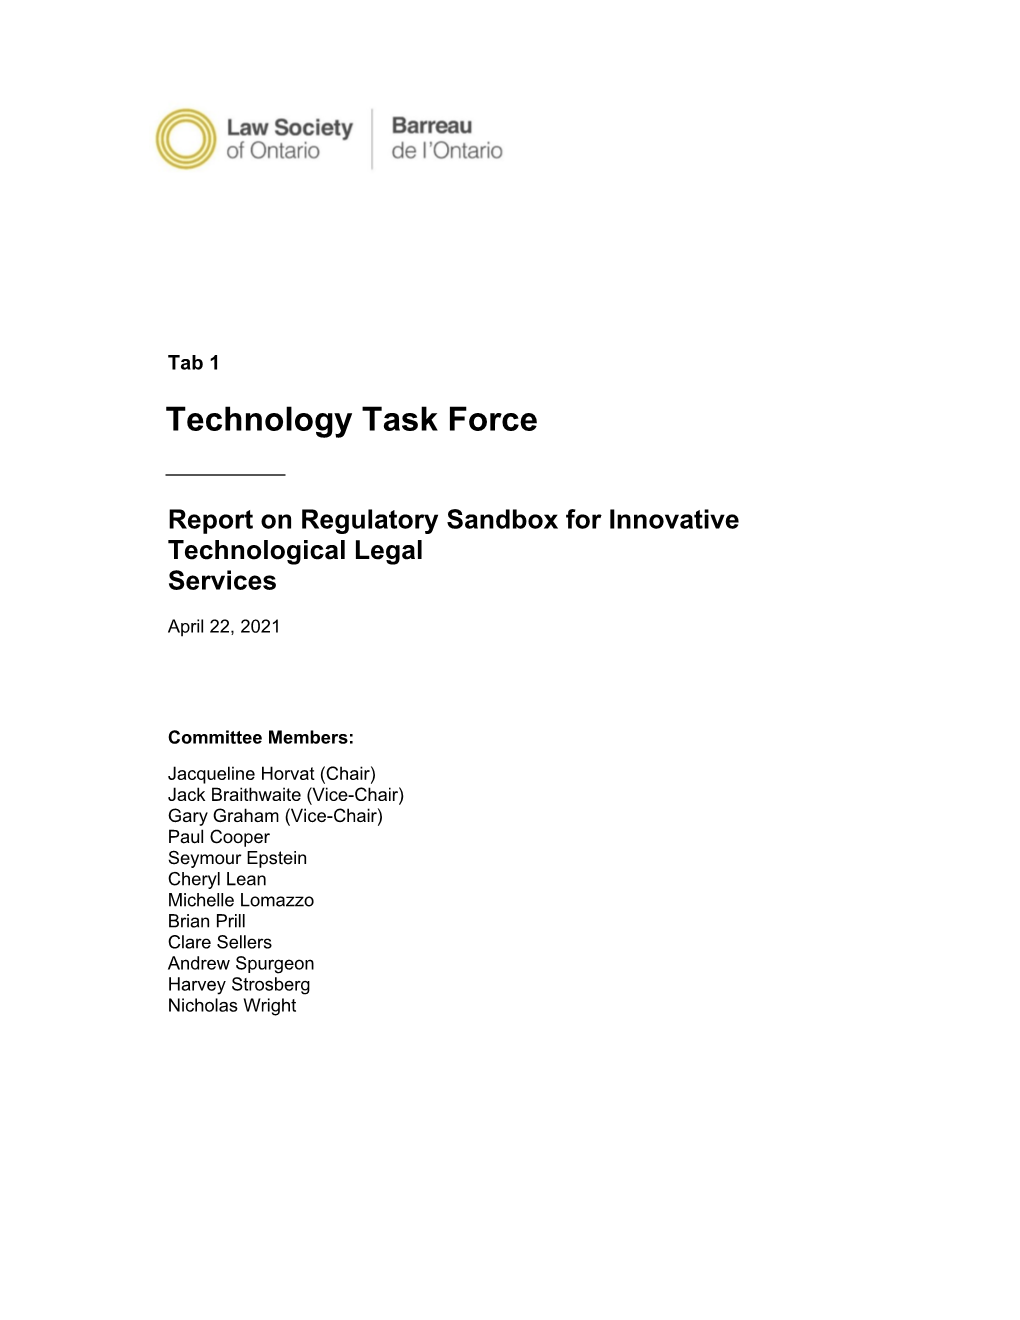 Report on Regulatory Sandbox for Innovative Technological Legal Services